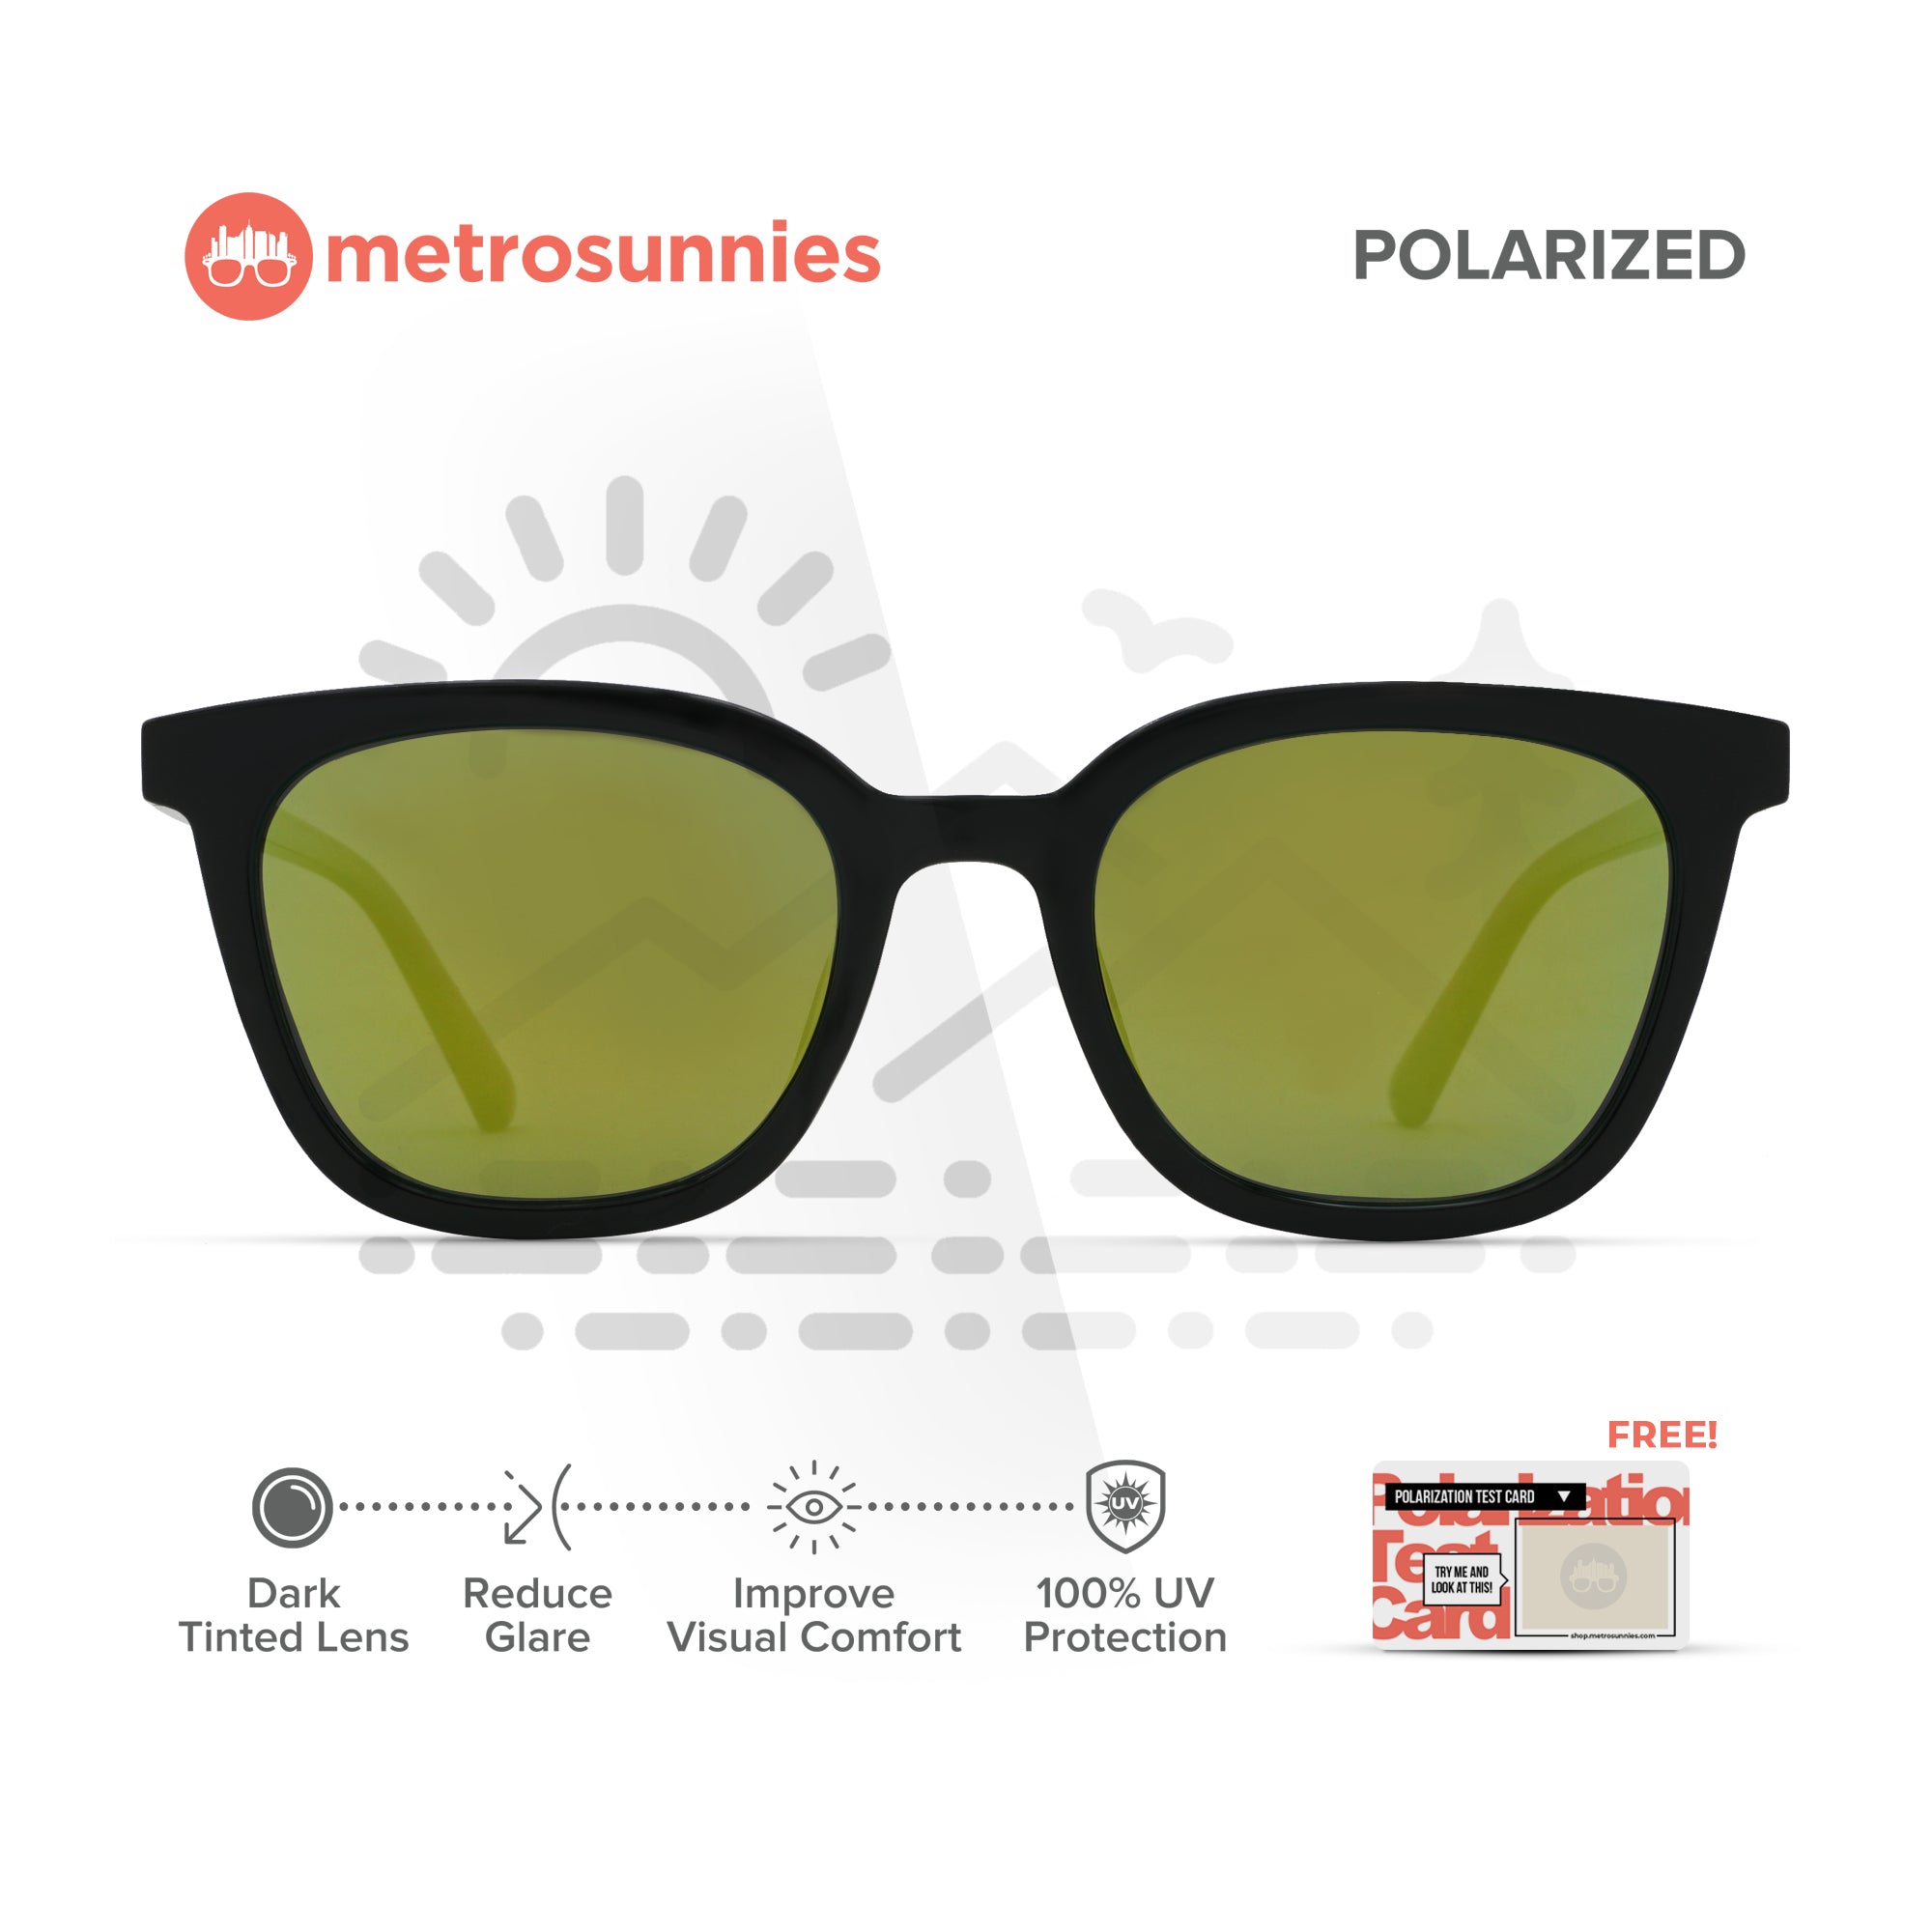 MetroSunnies Dewey Sunnies (Lime) / Polarized Sunglasses UV400 / Fashion Eyewear for Men and Women